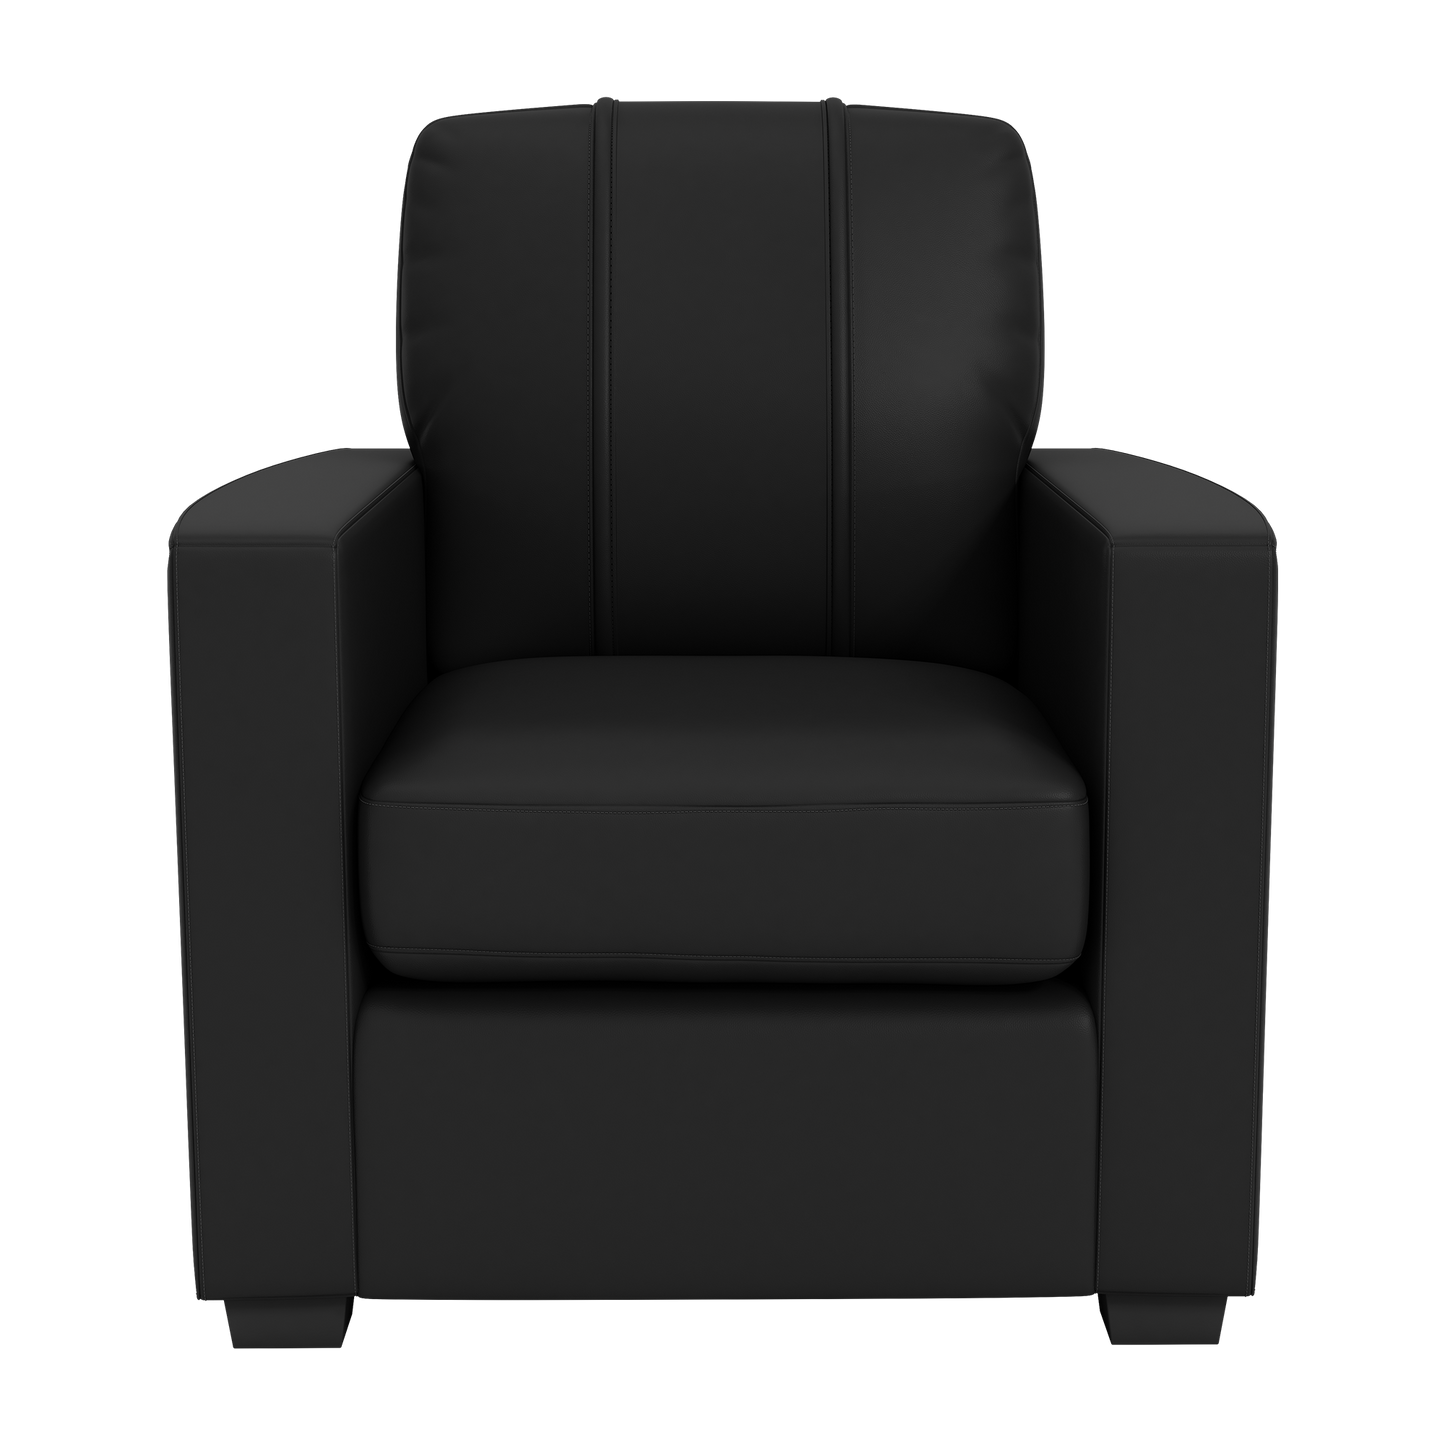 Silver Club Chair with Major League Soccer Logo